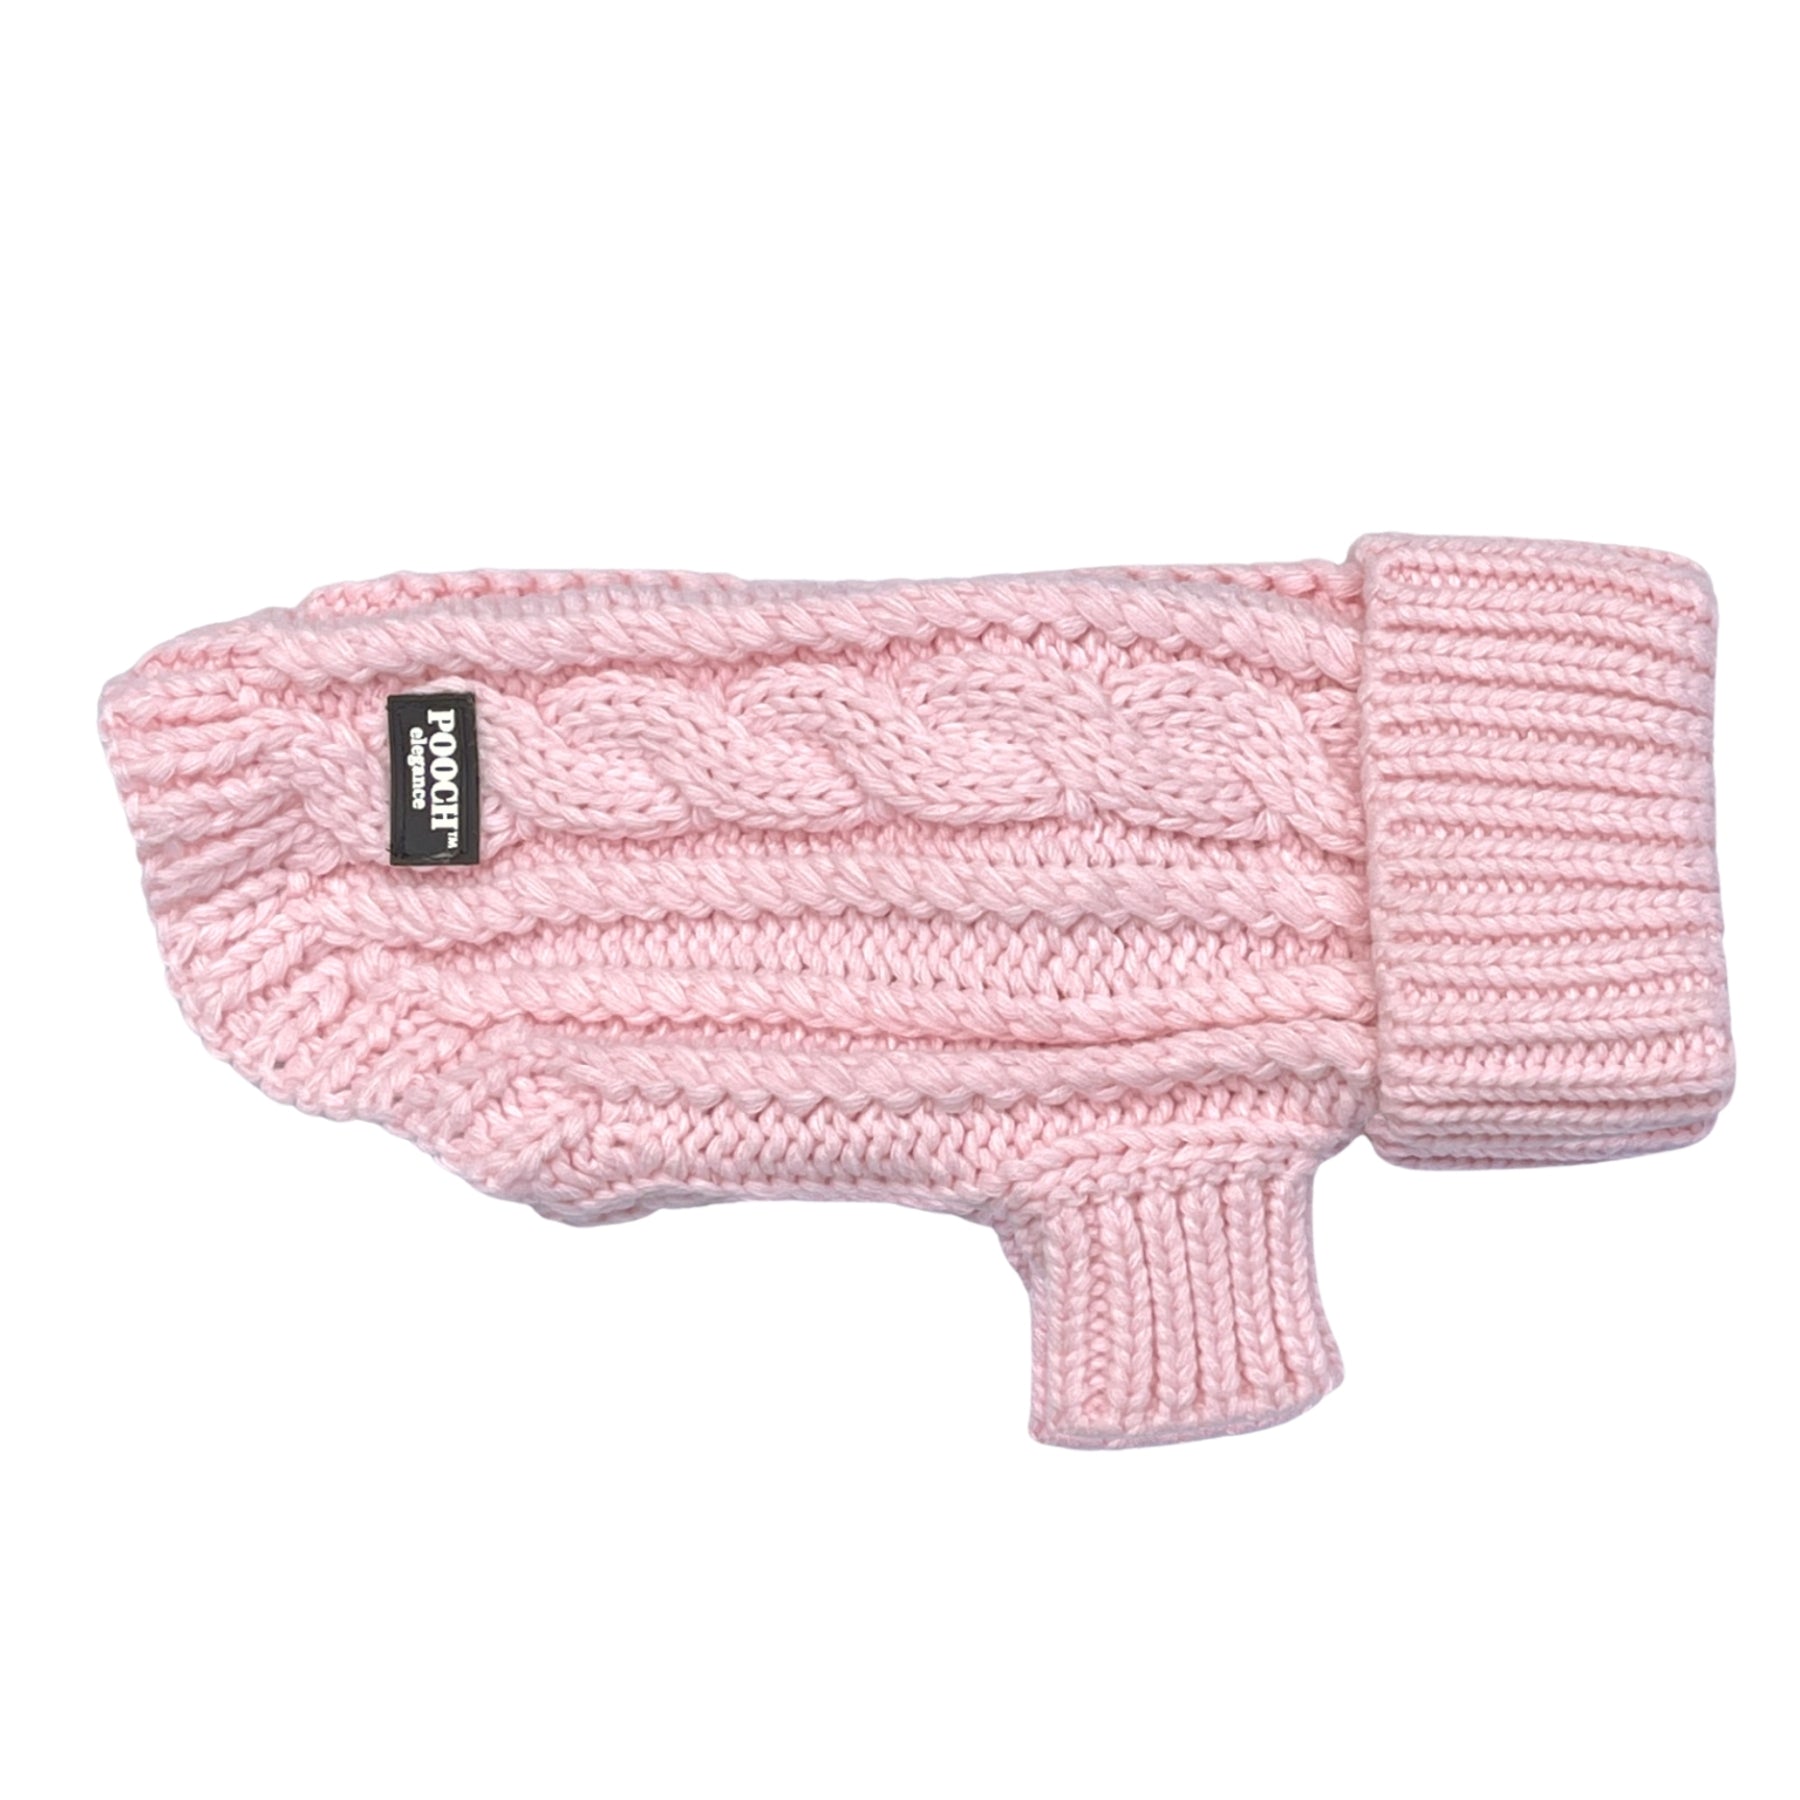 Dog Sweater - Pink Sprinkle